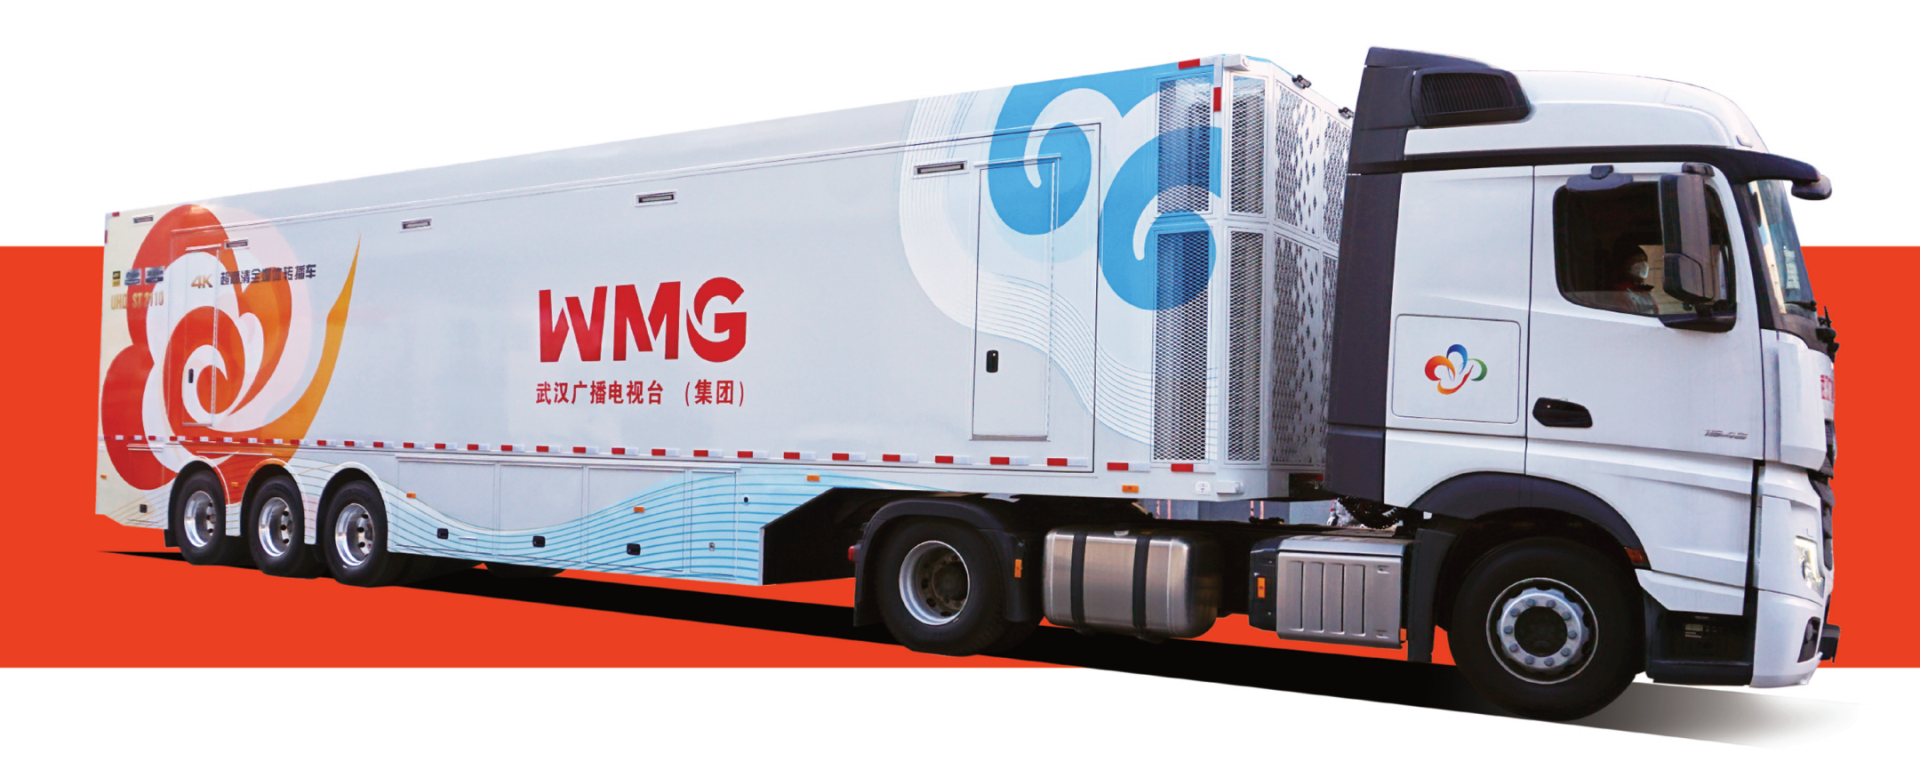 WMG Truck